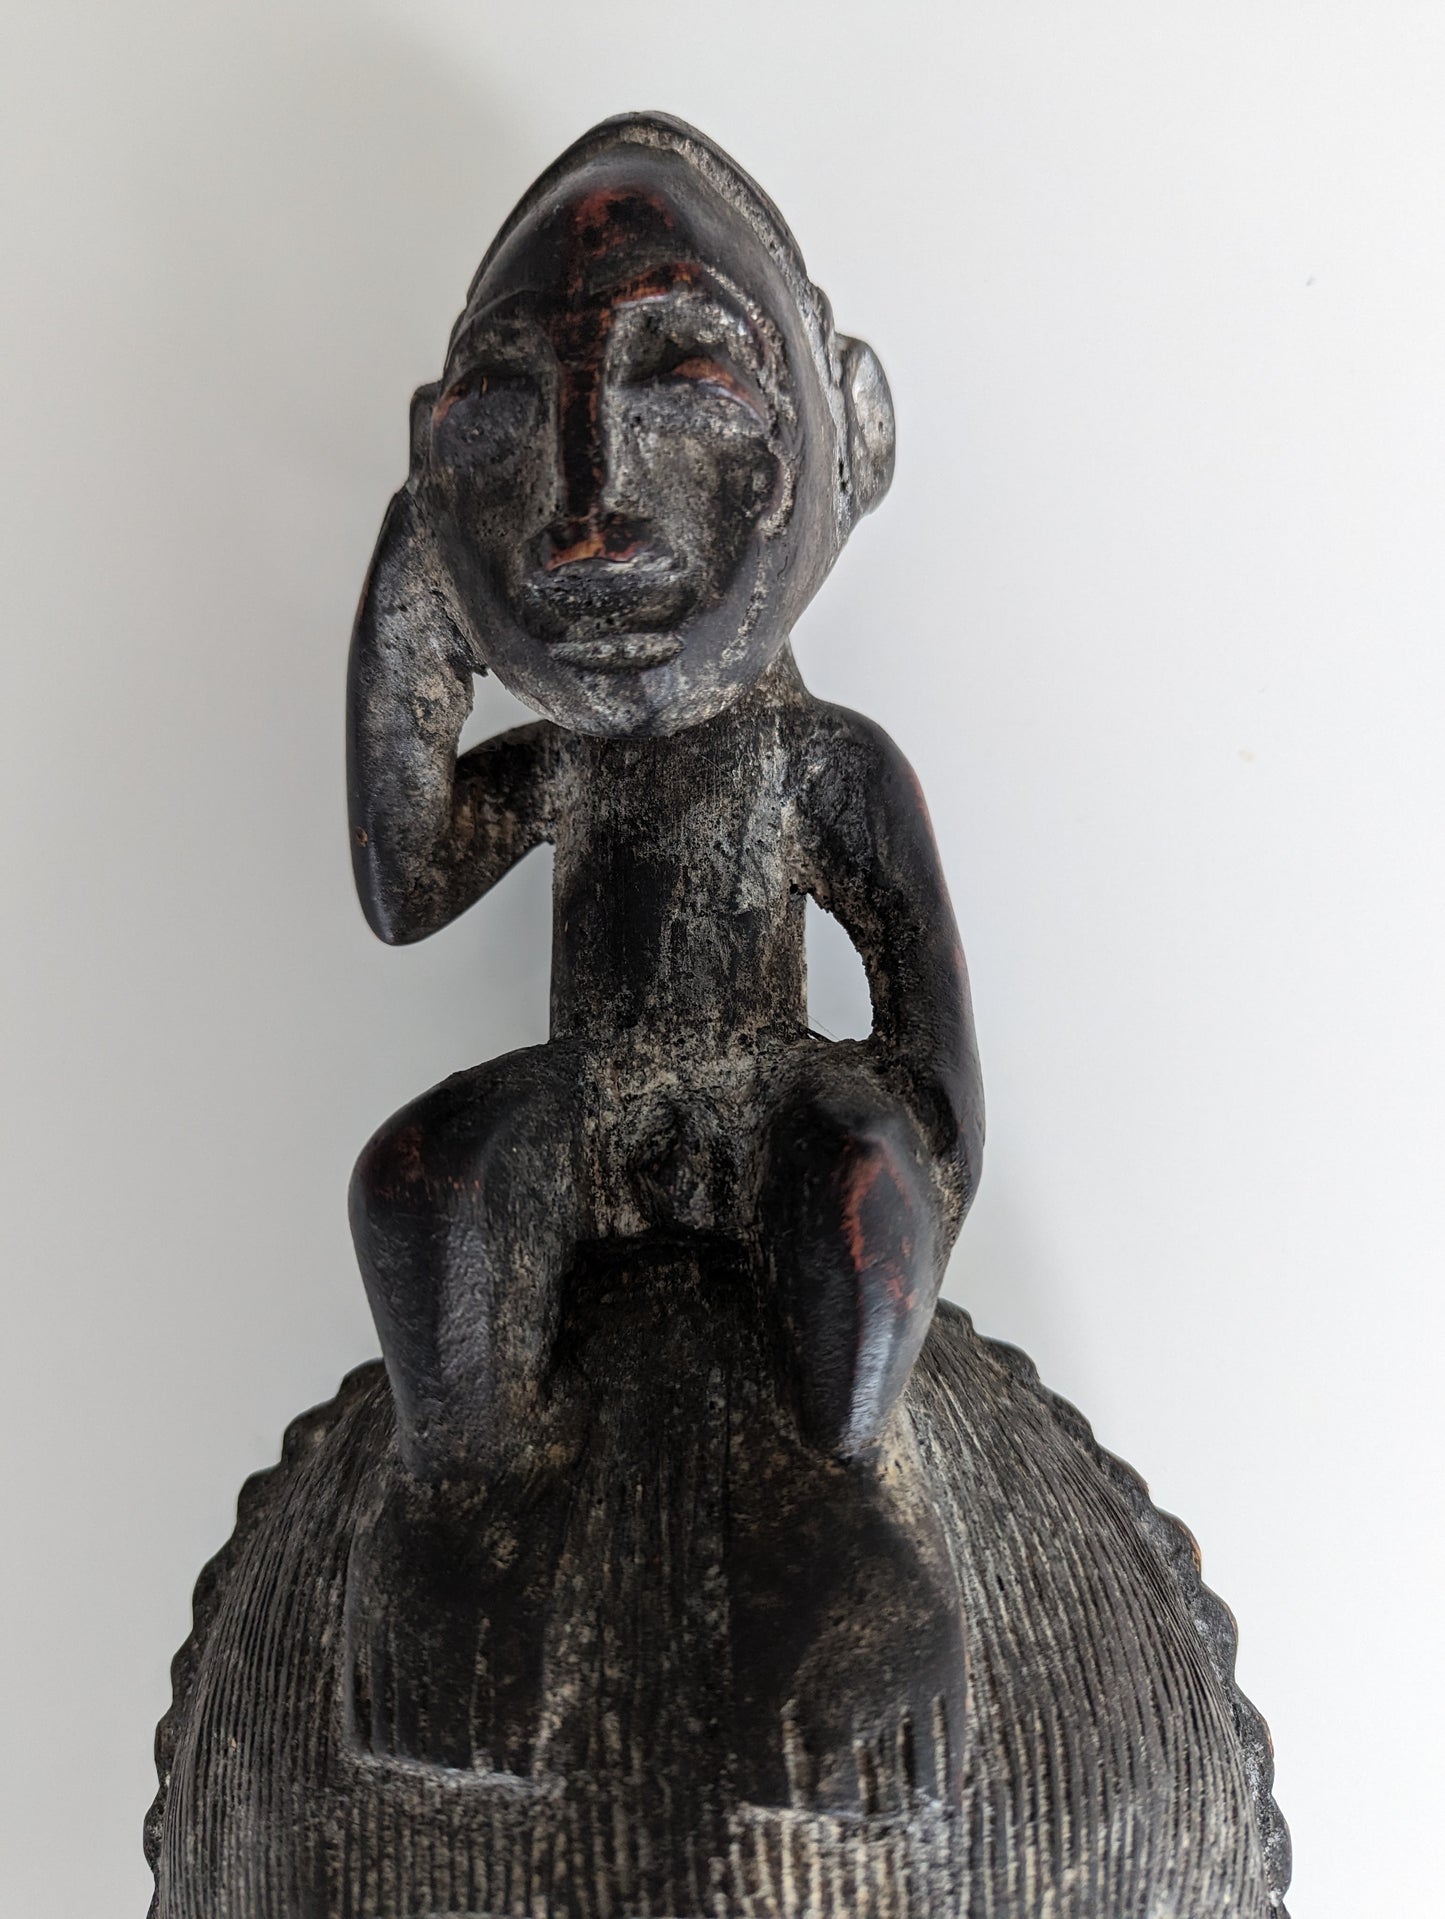 Yaoure Baule Mask with human figure